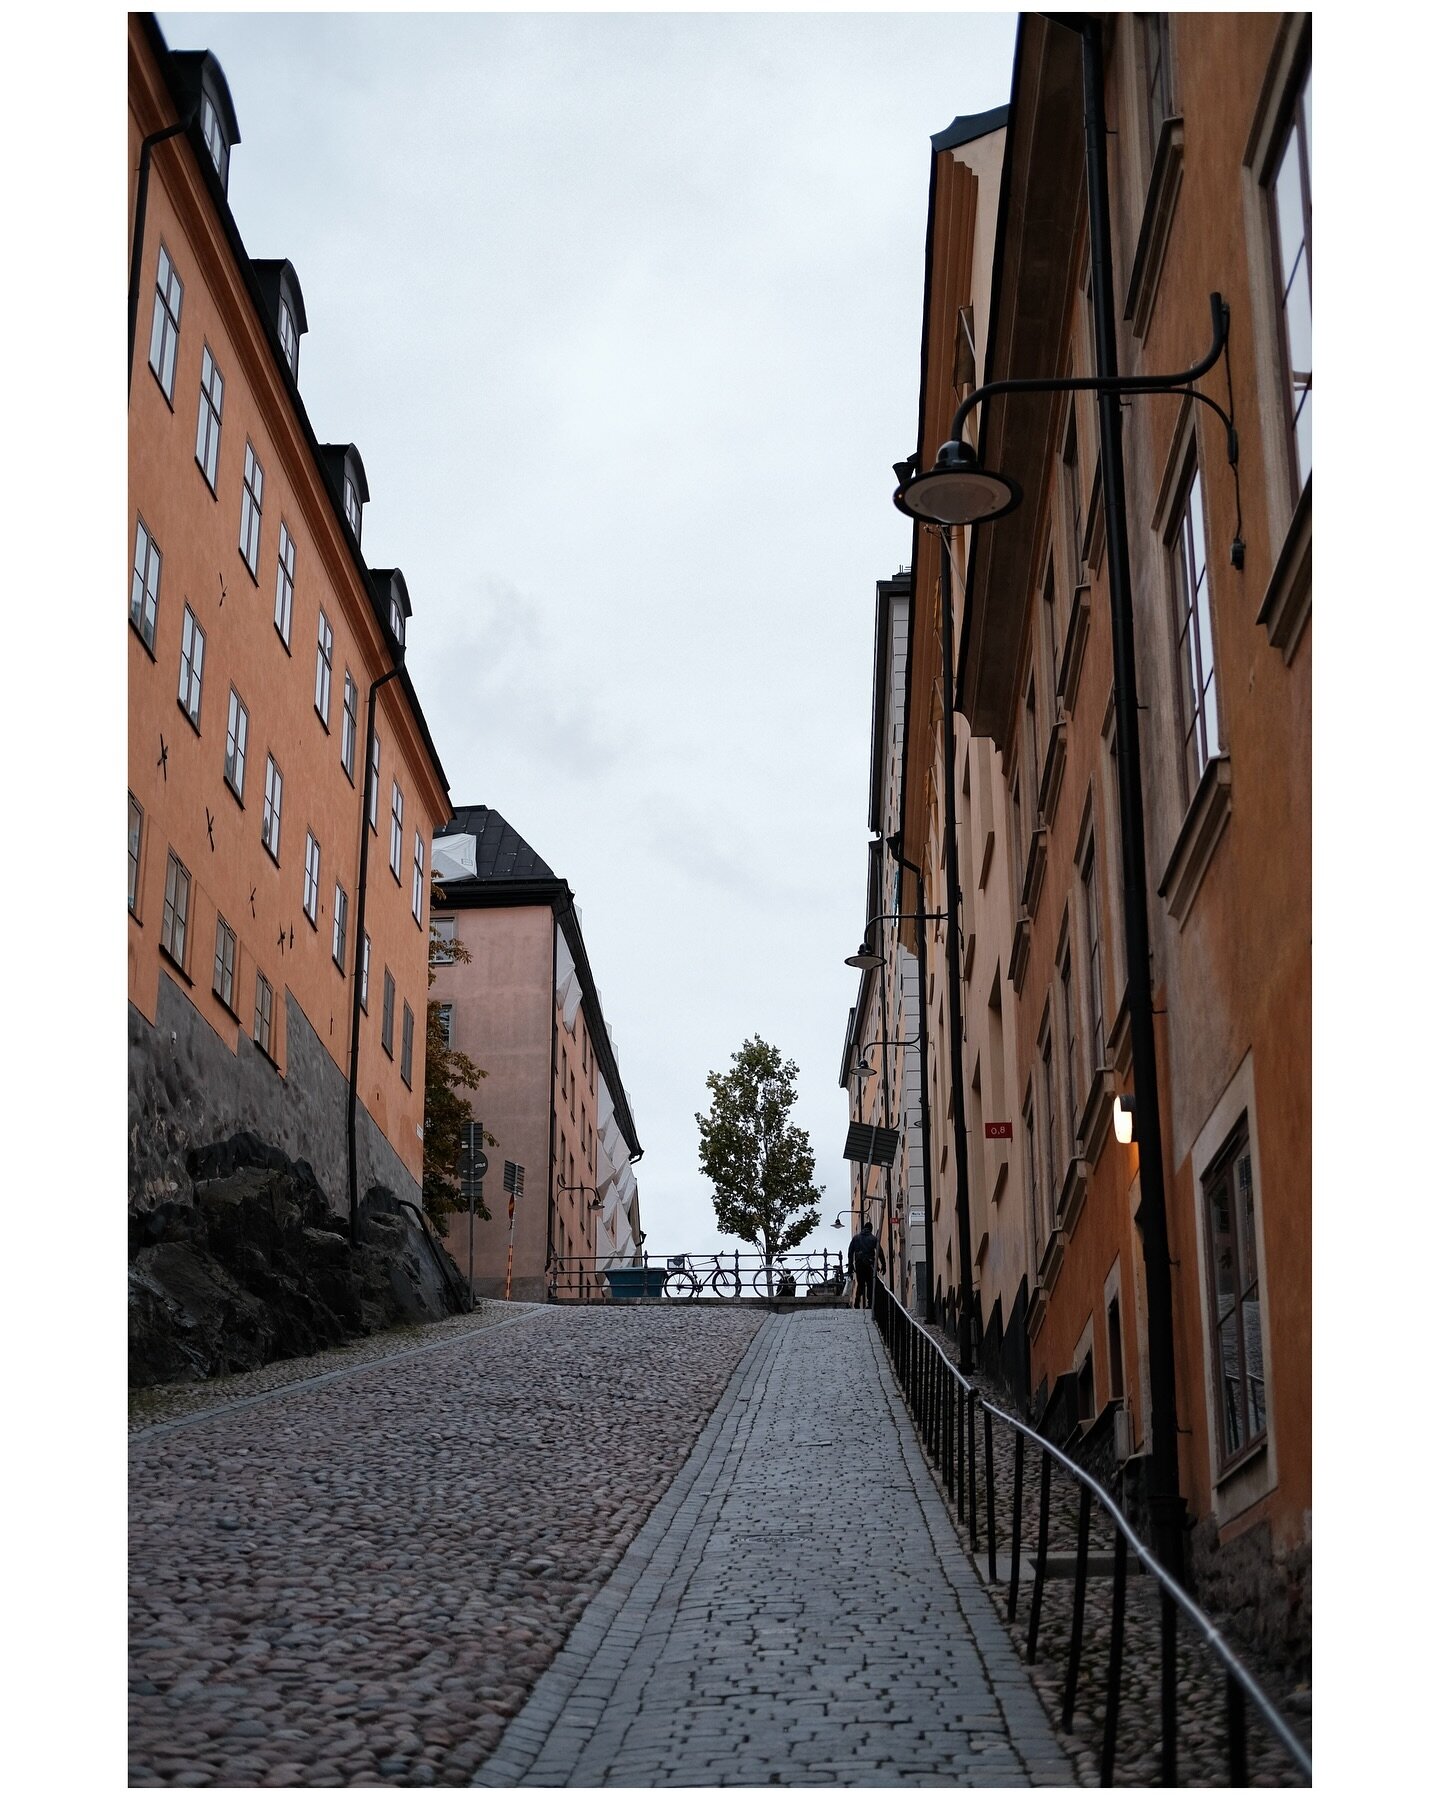 A lonely tree
Stockholm, Sweden
October 2023

#stockholm #visitstockholm #viewstockholm #sweden #sverige #fujifilm_xseries #fujifilmnordic #fujifilmxpro3 #xpro3 #fujifilm #fujifilm_global #fujifilmfocus #myfujilove #fujimag #spicollective #shinyhappy